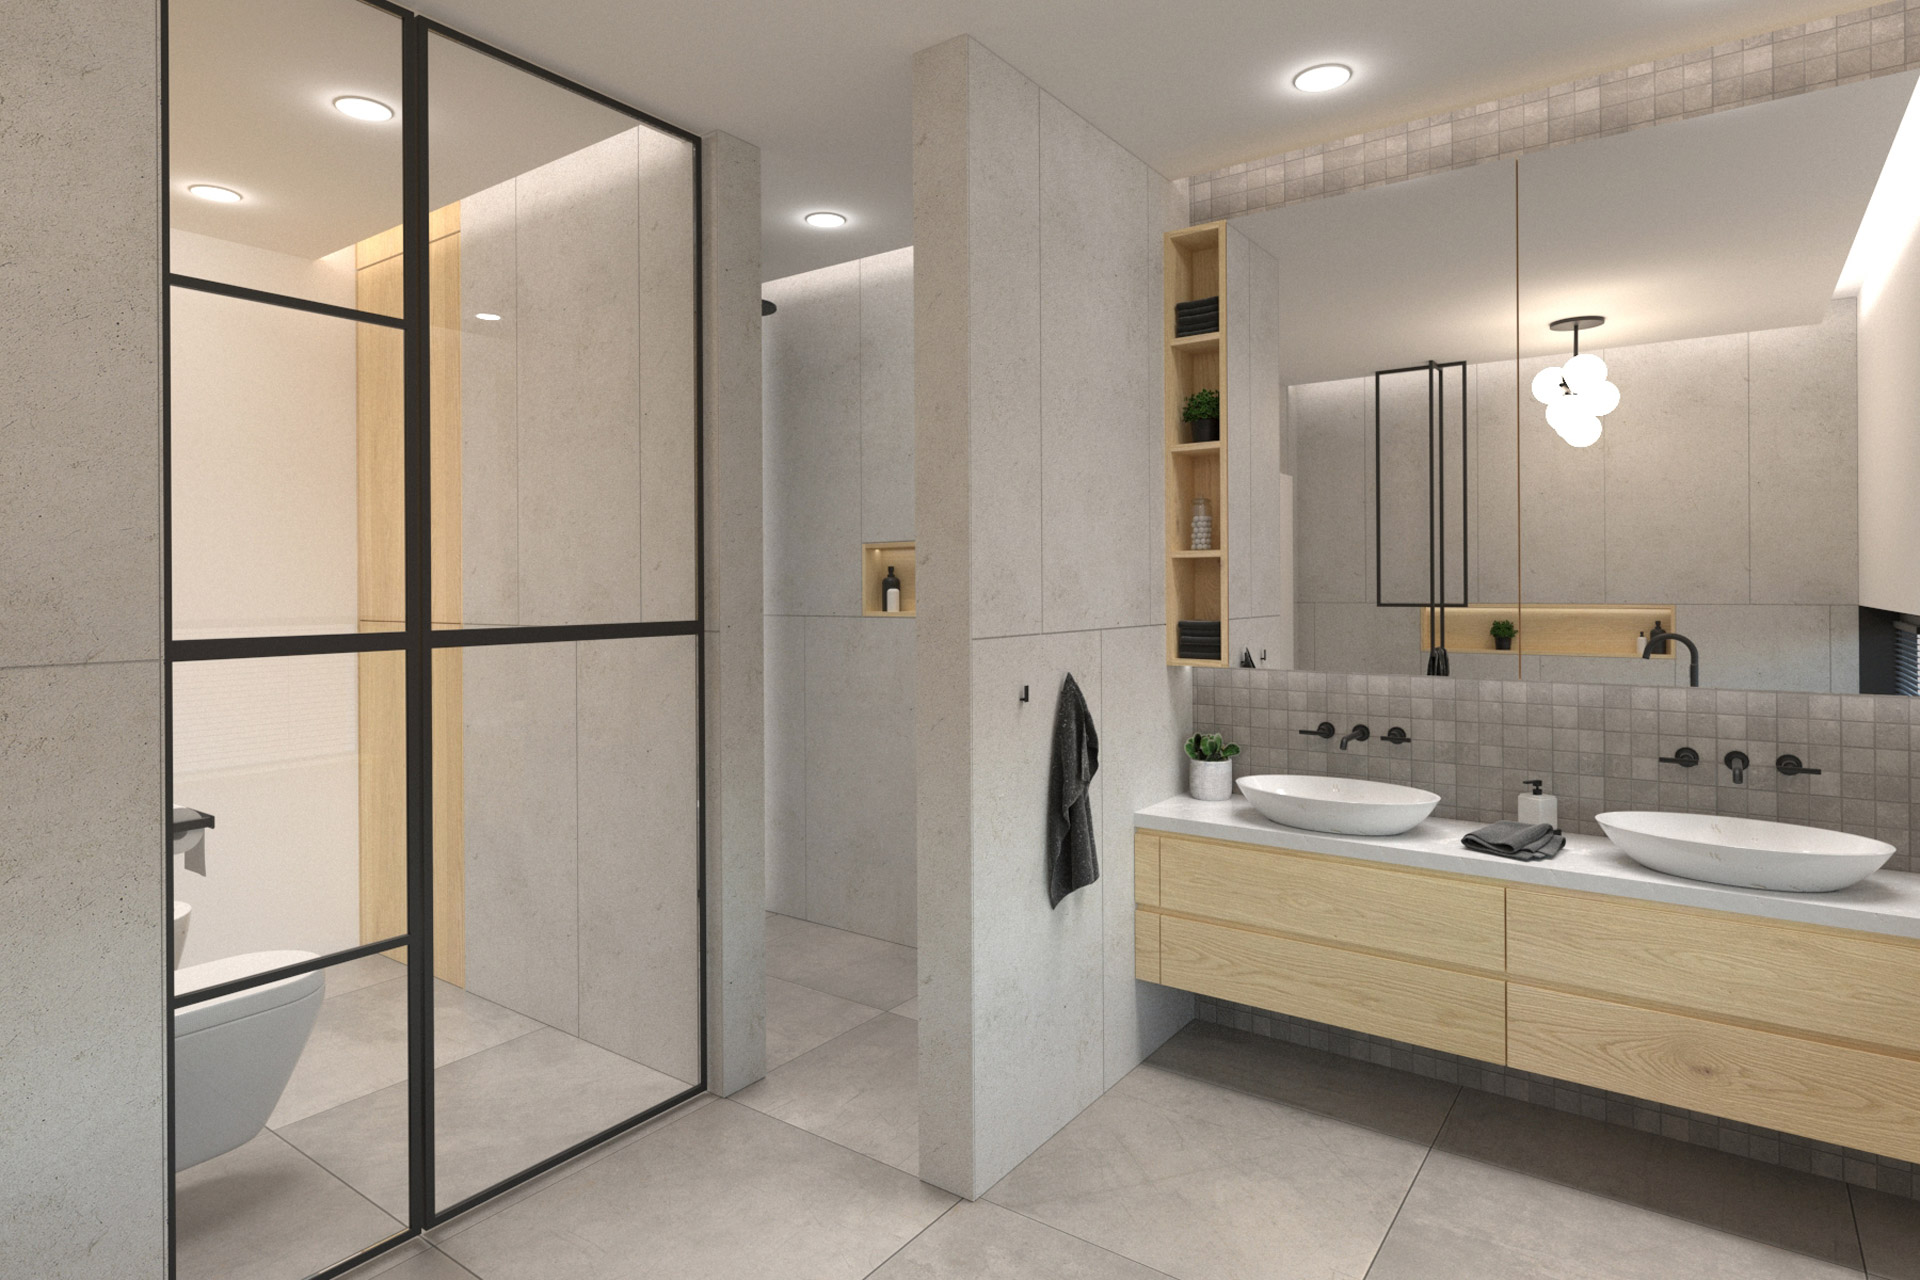 Hanak Modern interior design of the house Bathroom